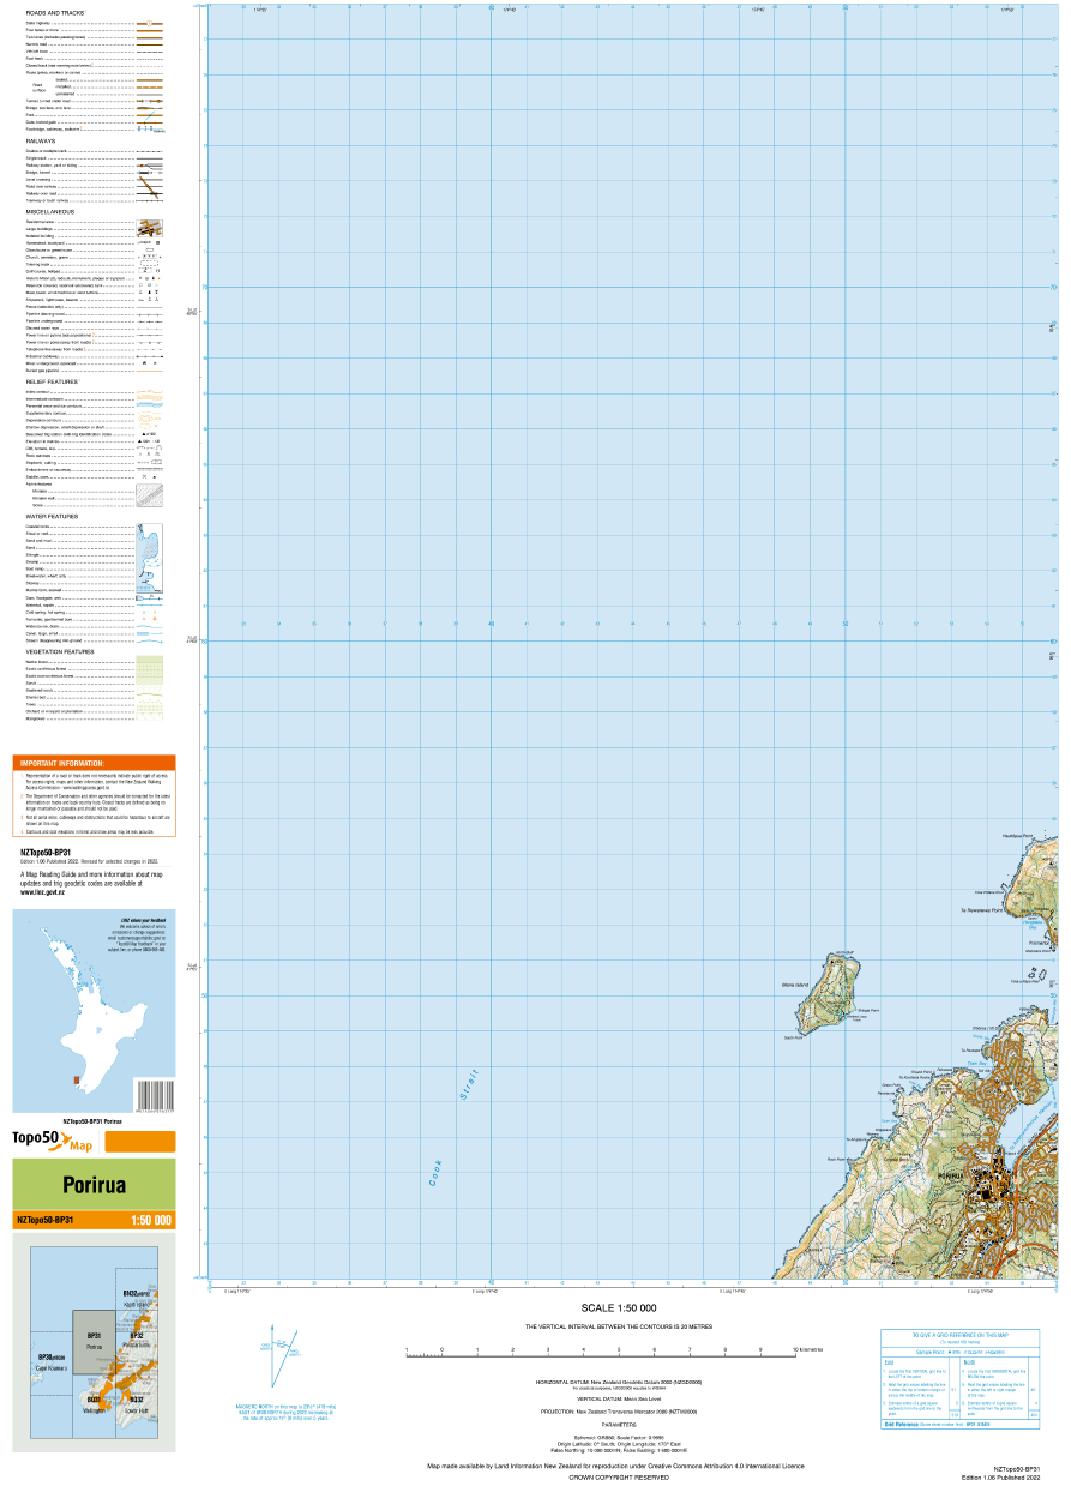 Topo map of Porirua